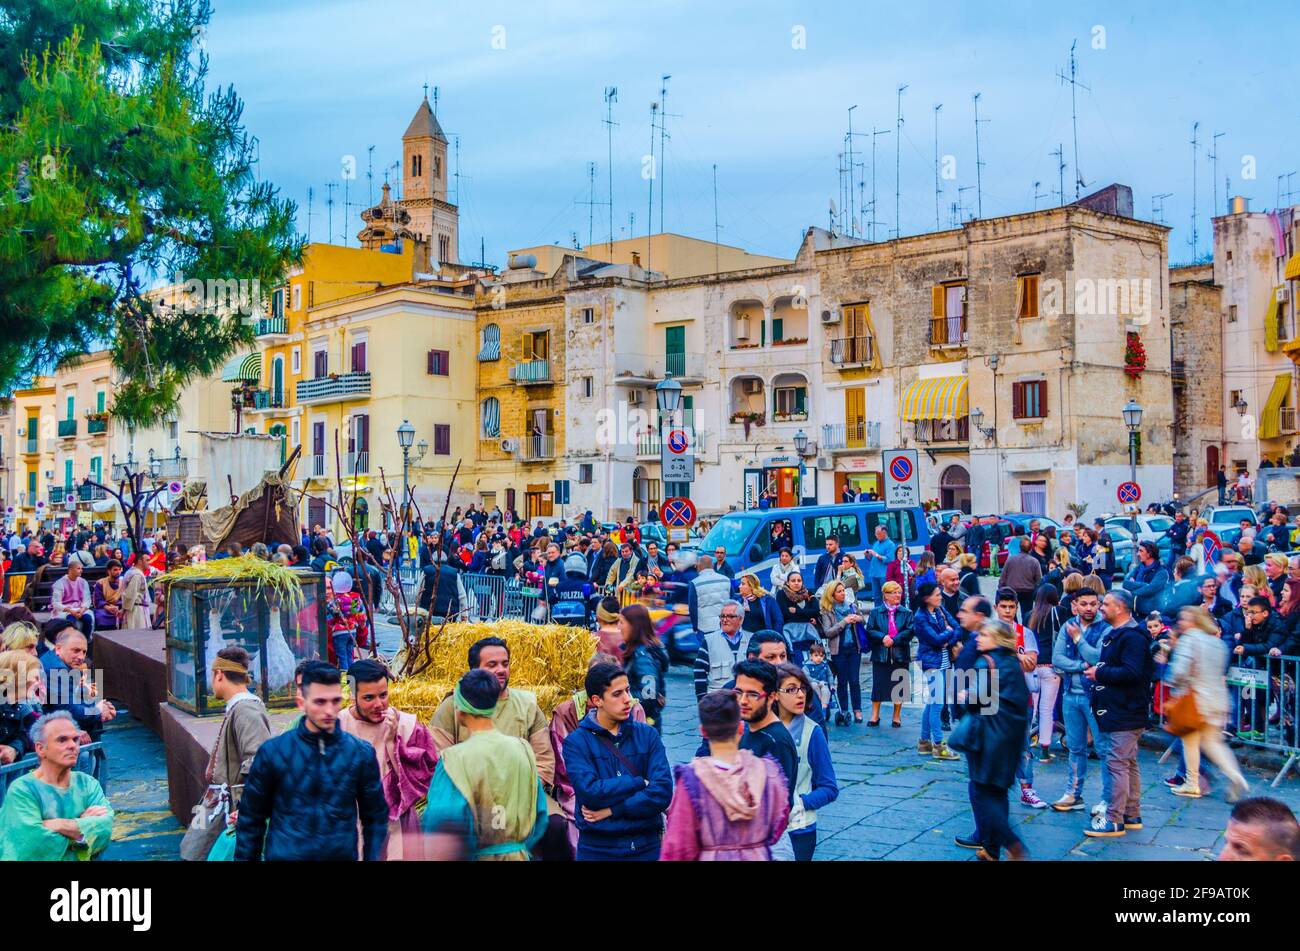 BARI, ITALIE, 7 MAI 2014: Les gens célèbrent le festival de saint nicola dans les rues de la ville italienne bari. Banque D'Images